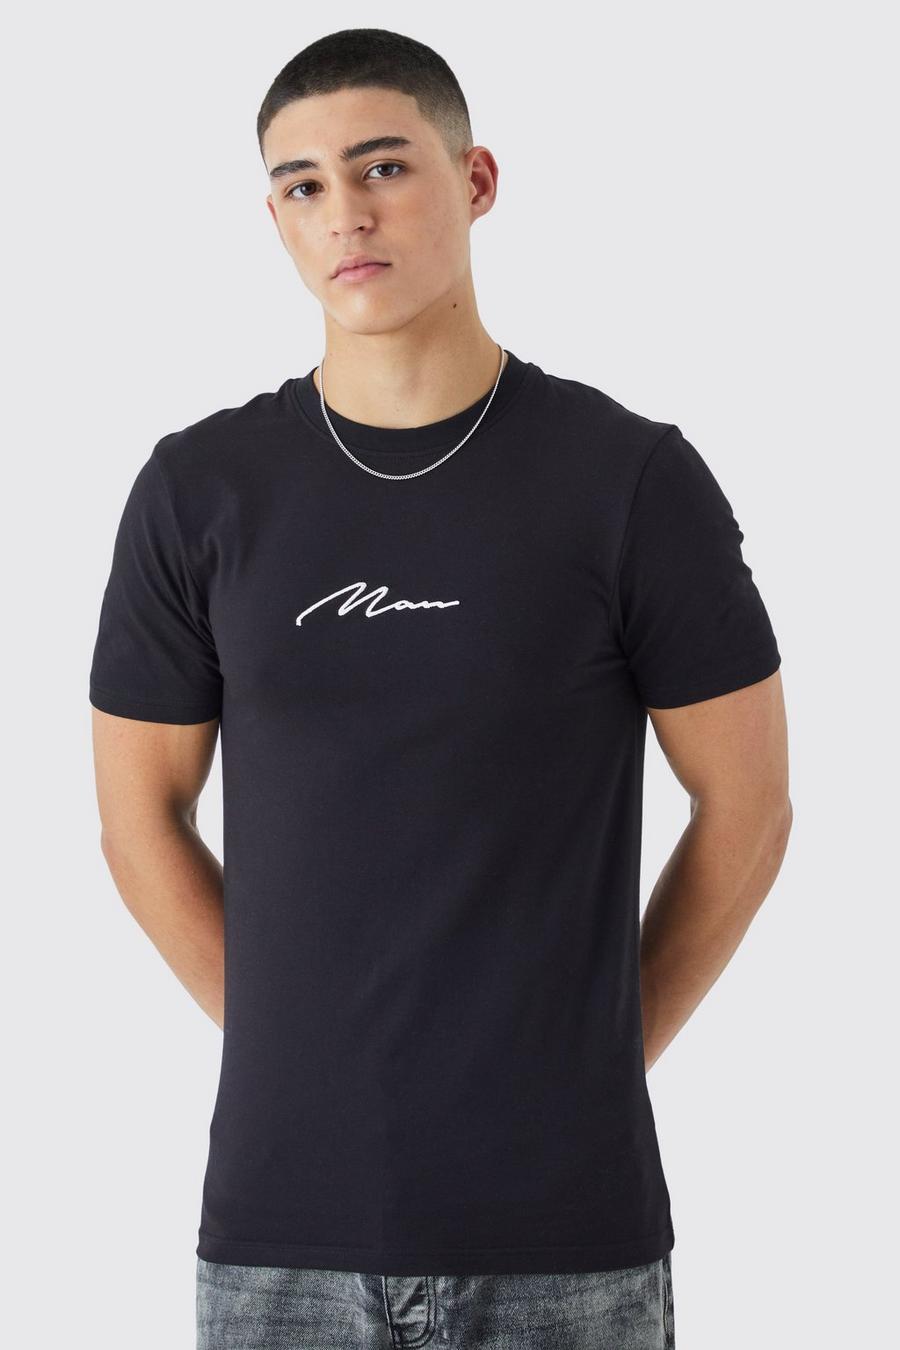 Camiseta con firma MAN ajustada al músculo, Black